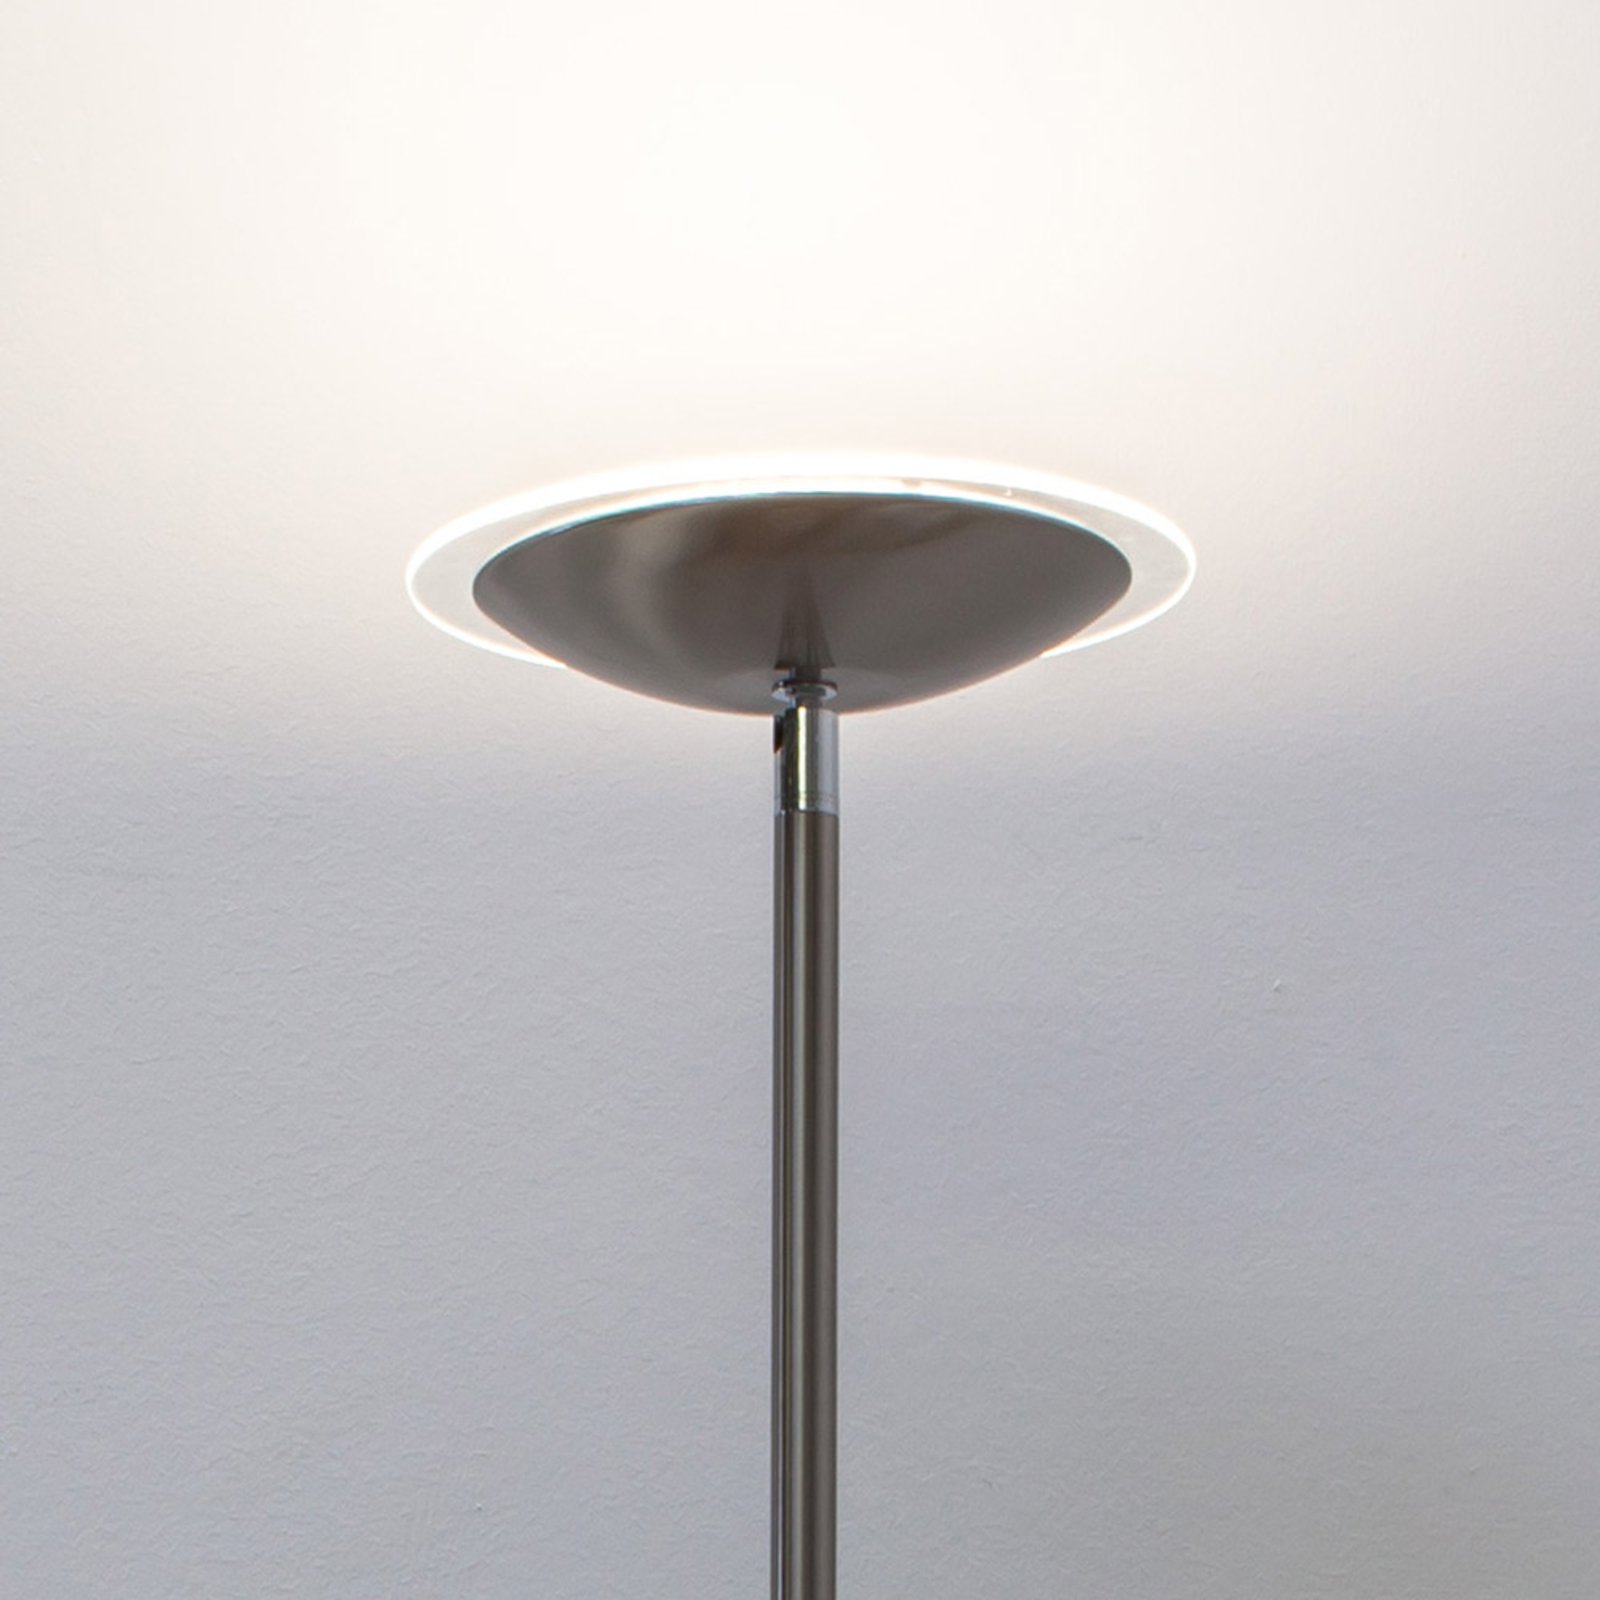 LED stojacia lampa osvetľujúca strop Malea, nikel